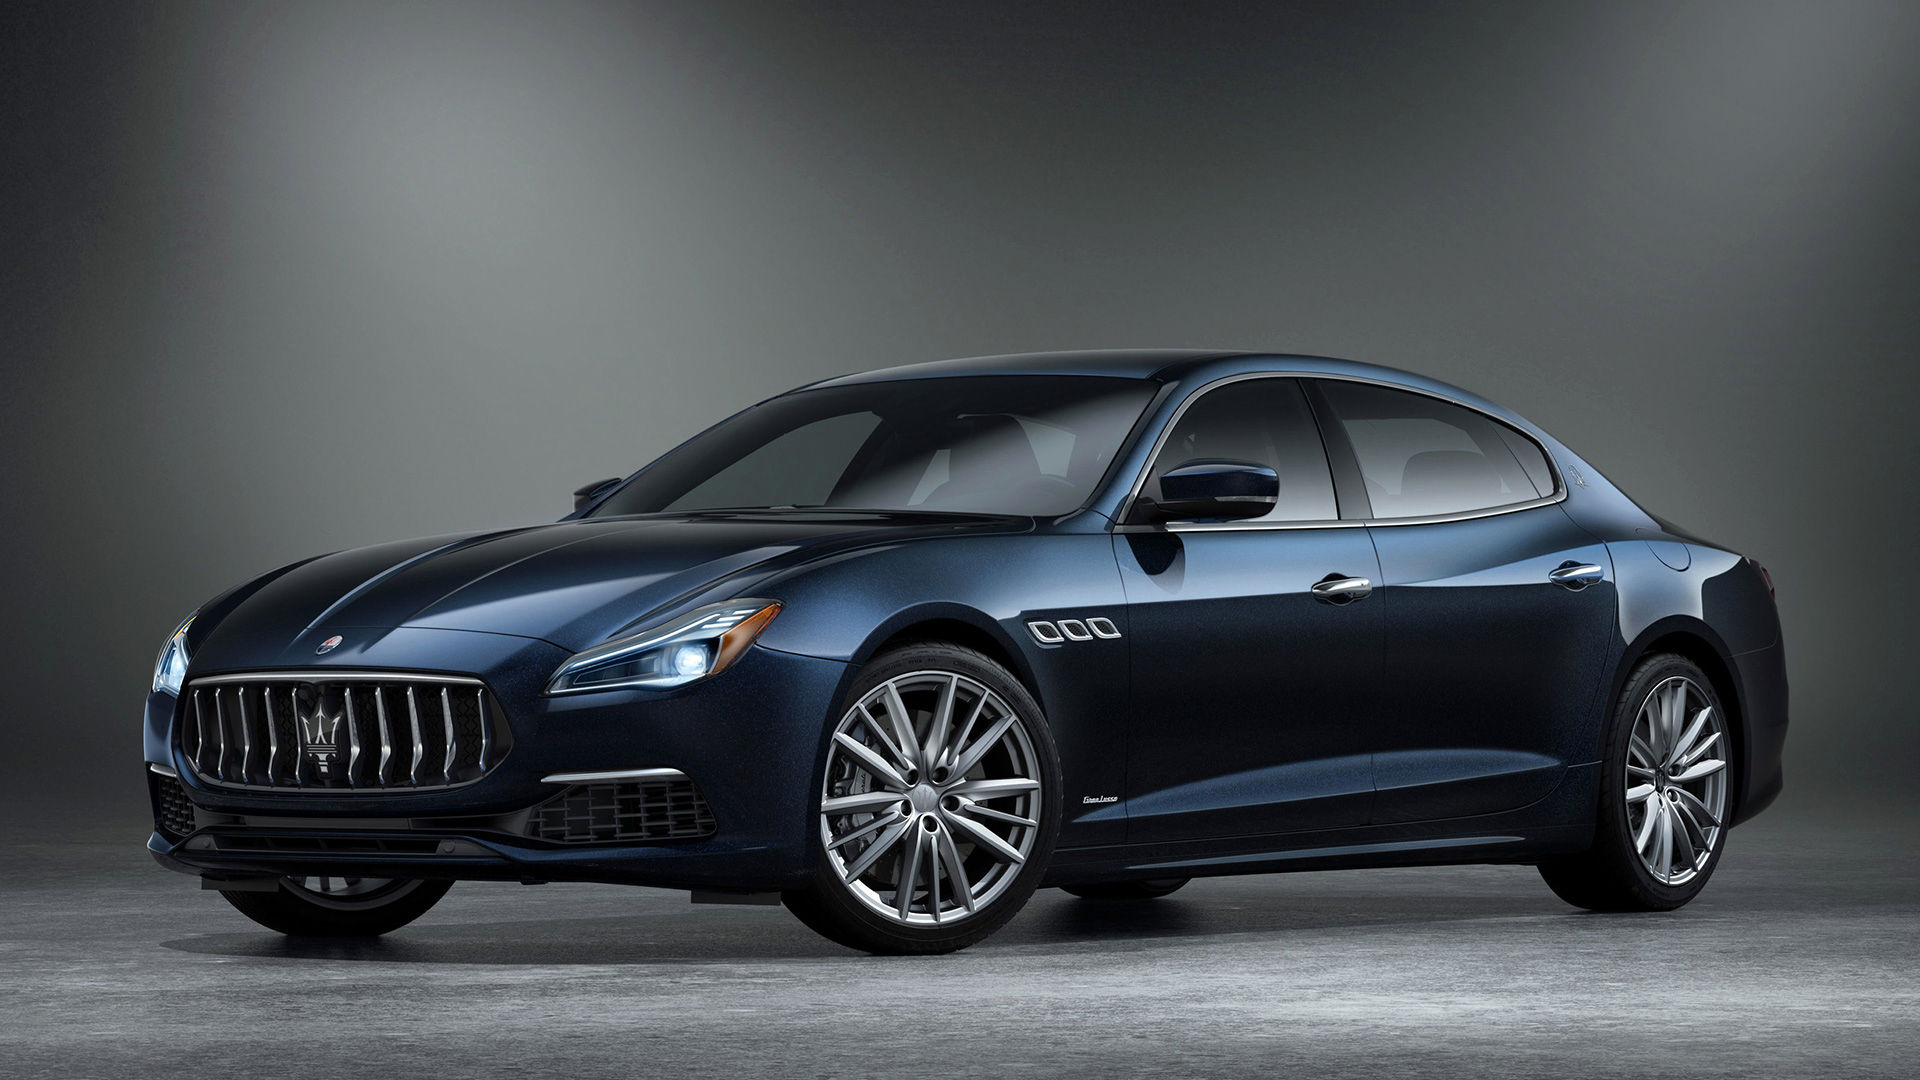 Maserati Quattroporte Edizione Nobile - vue latérale - couleur Bleu Nobile (bleu roi)